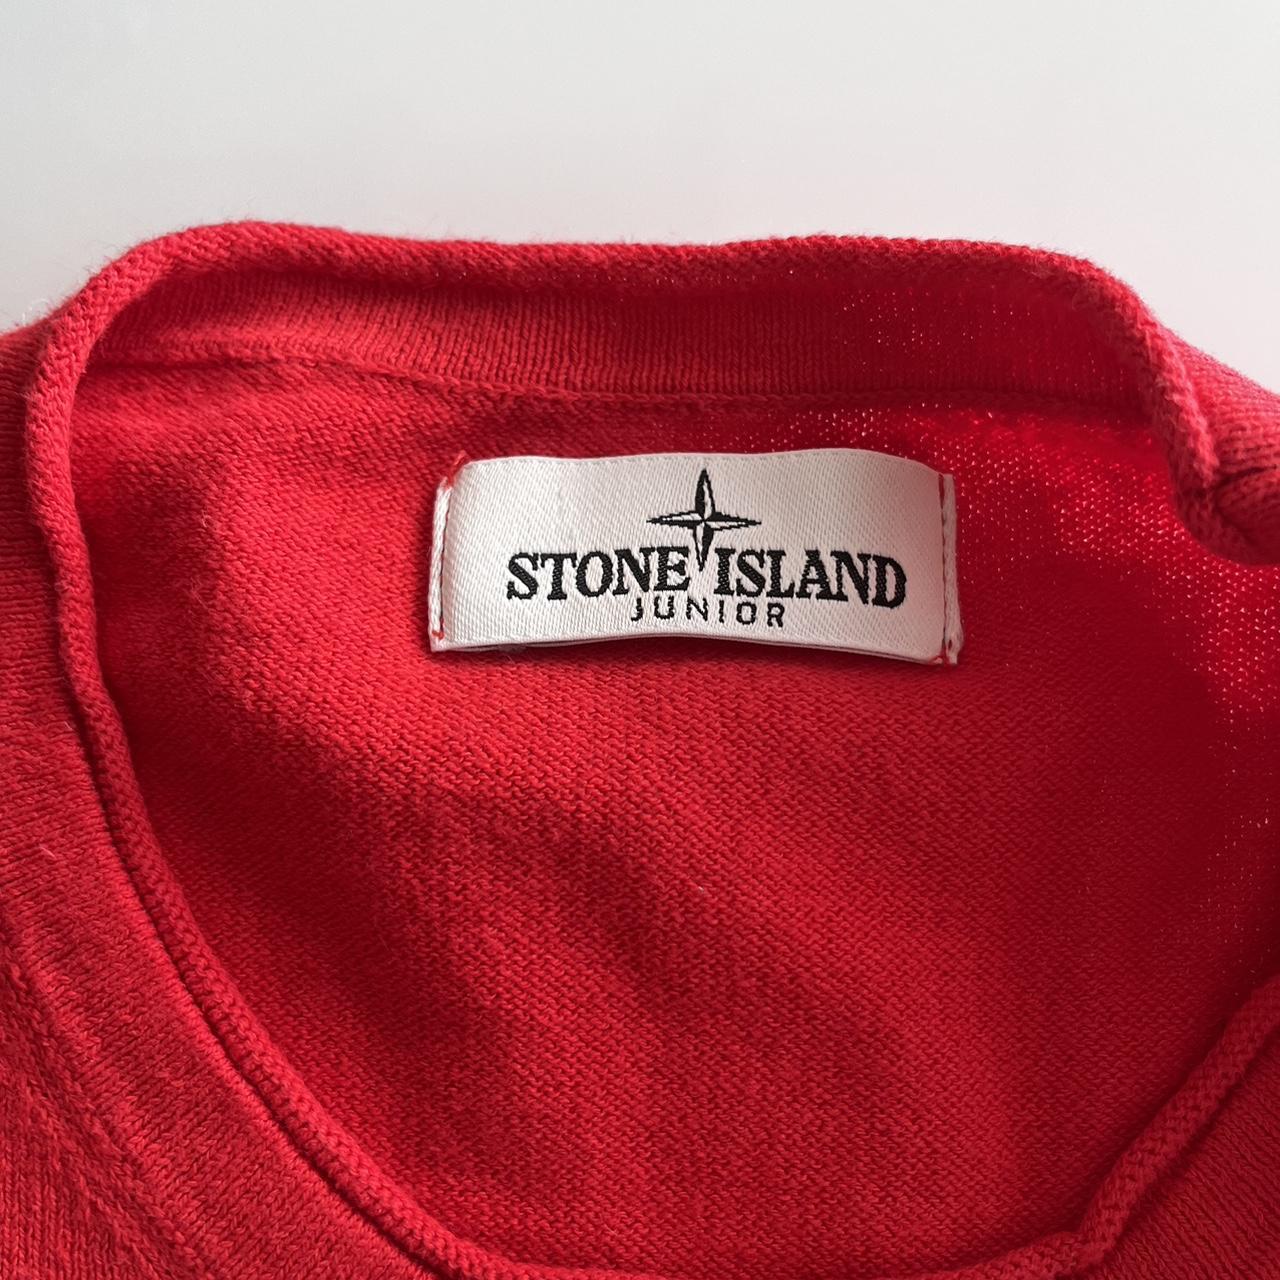 Vendo maglione Stone Island rosso categoria JUNIOR.... - Depop